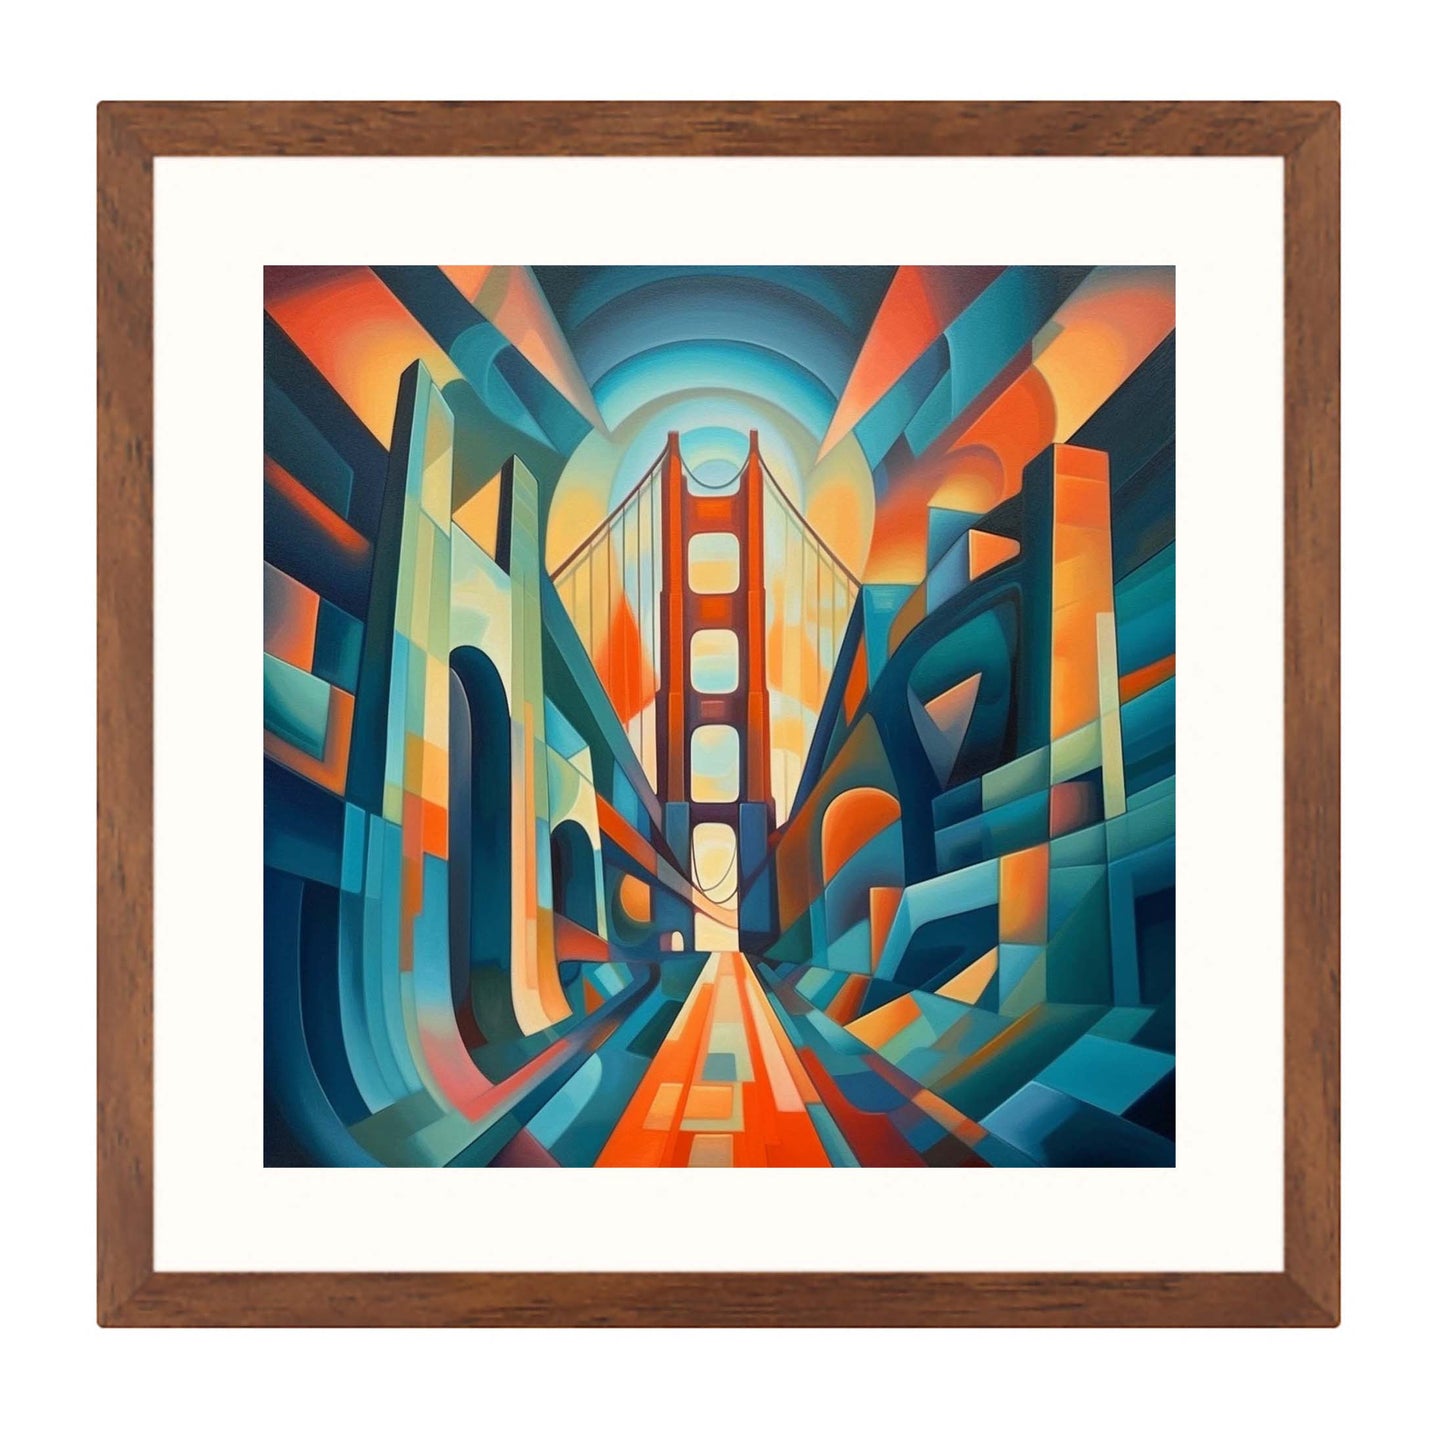 San Francisco Golden Gate Bridge - mural in the style of futurism